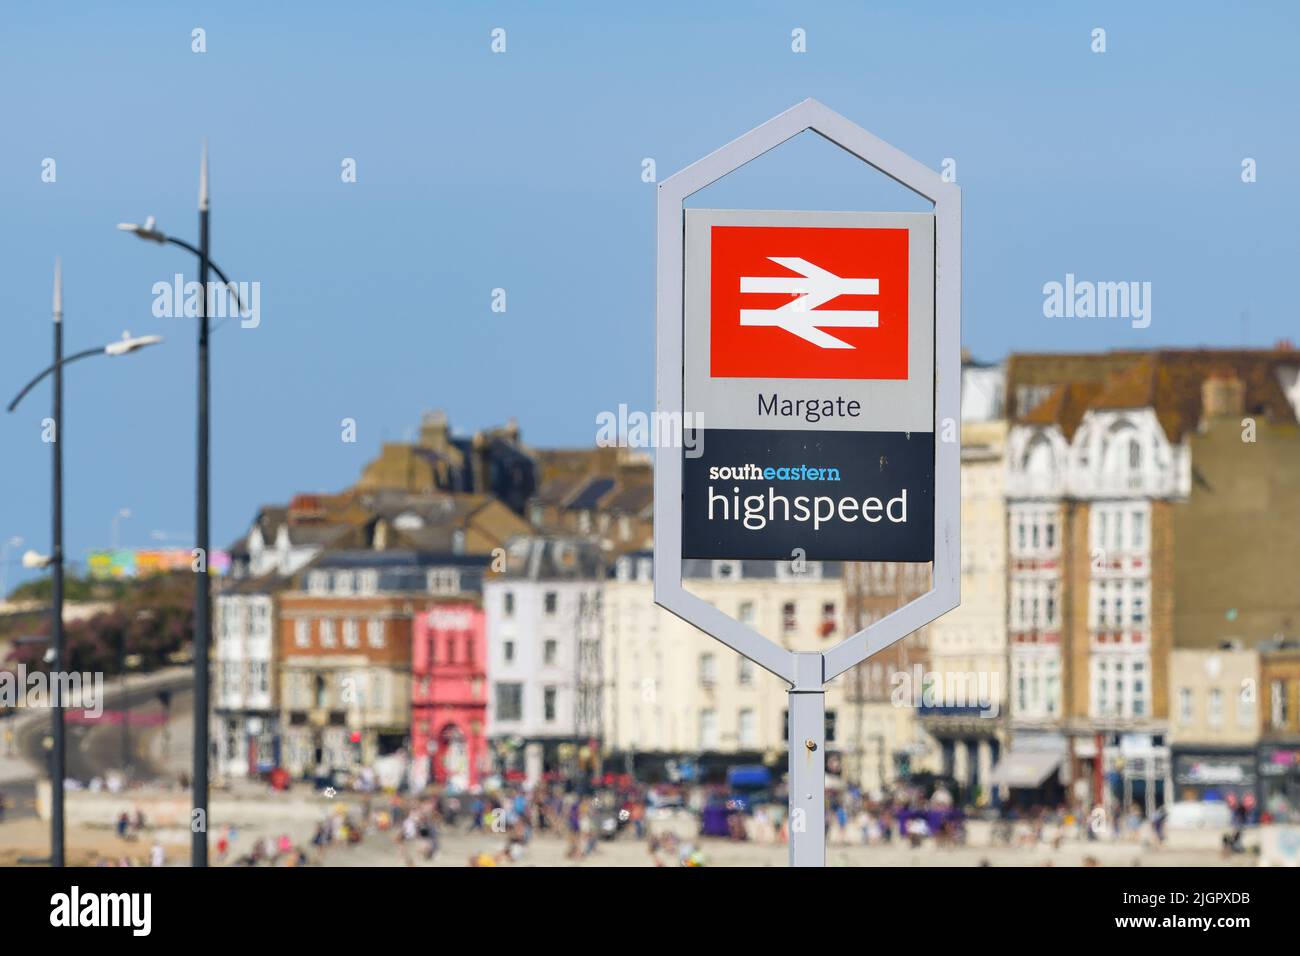 Margate train station southeastern highspeed sign, Margate, Kent, England, UK Stock Photo